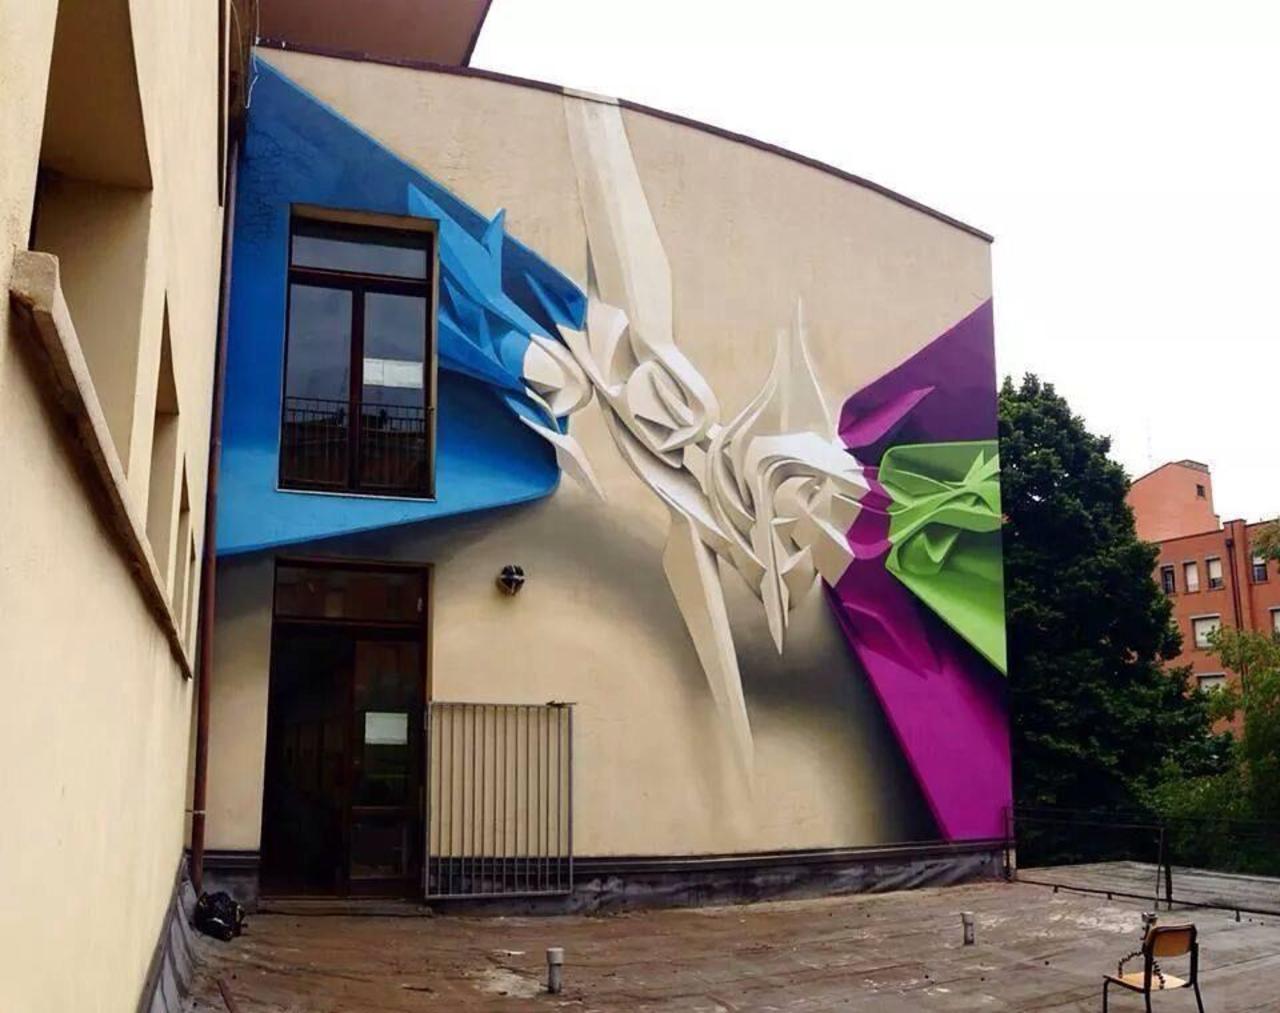 Artist @peeta3D amazing Street Art piece in Italy #art #mural #graffiti #streetart http://t.co/htQPxpFuQu